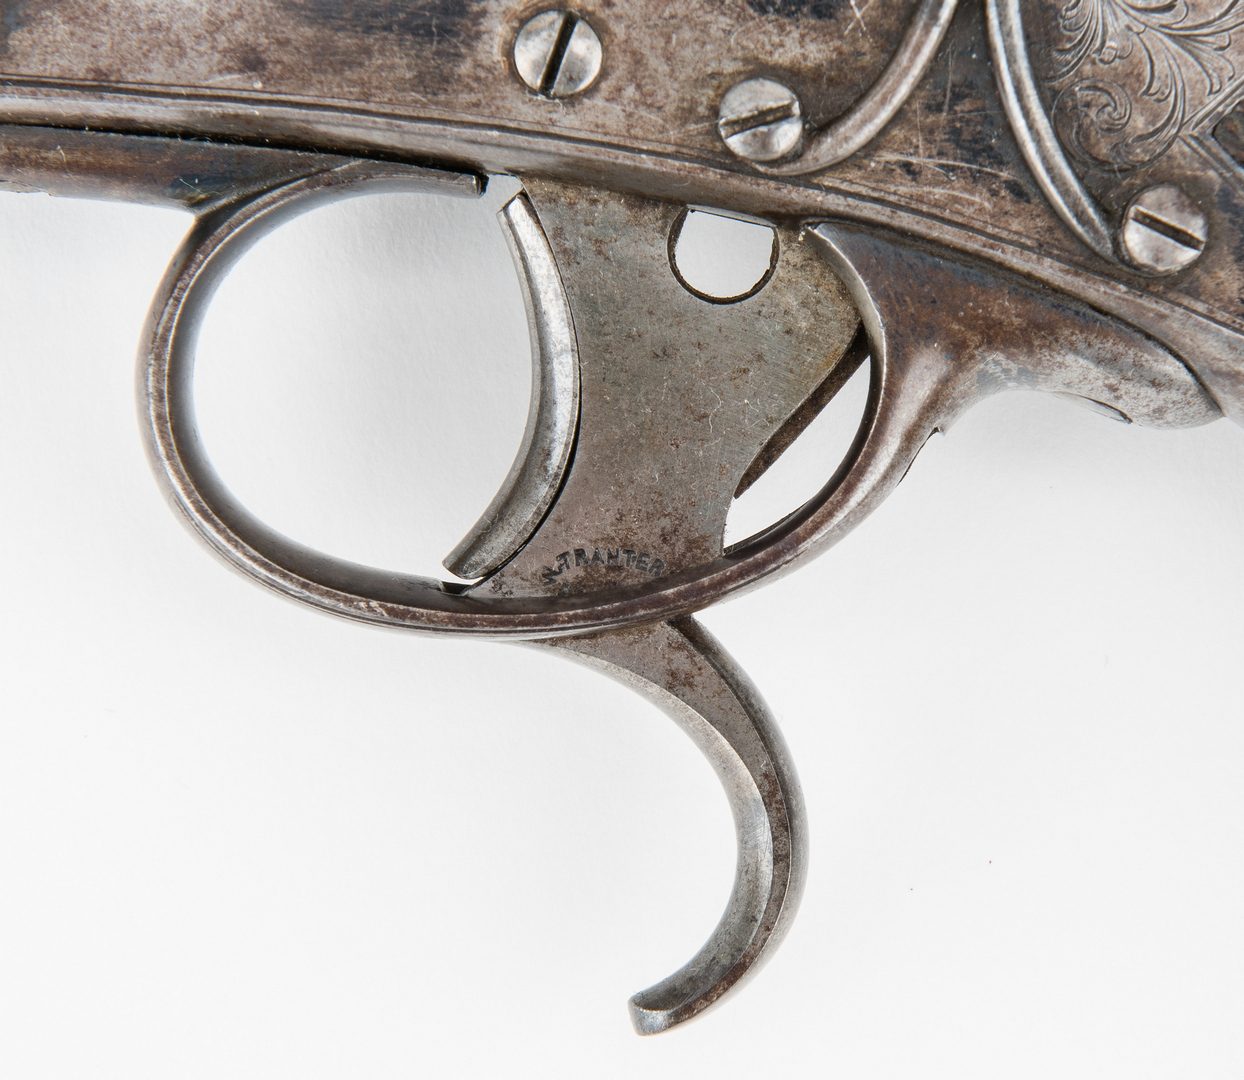 Lot 298: Hyde & Goodrich New Orleans Agent Marked Tranter Revolver, SN 8803